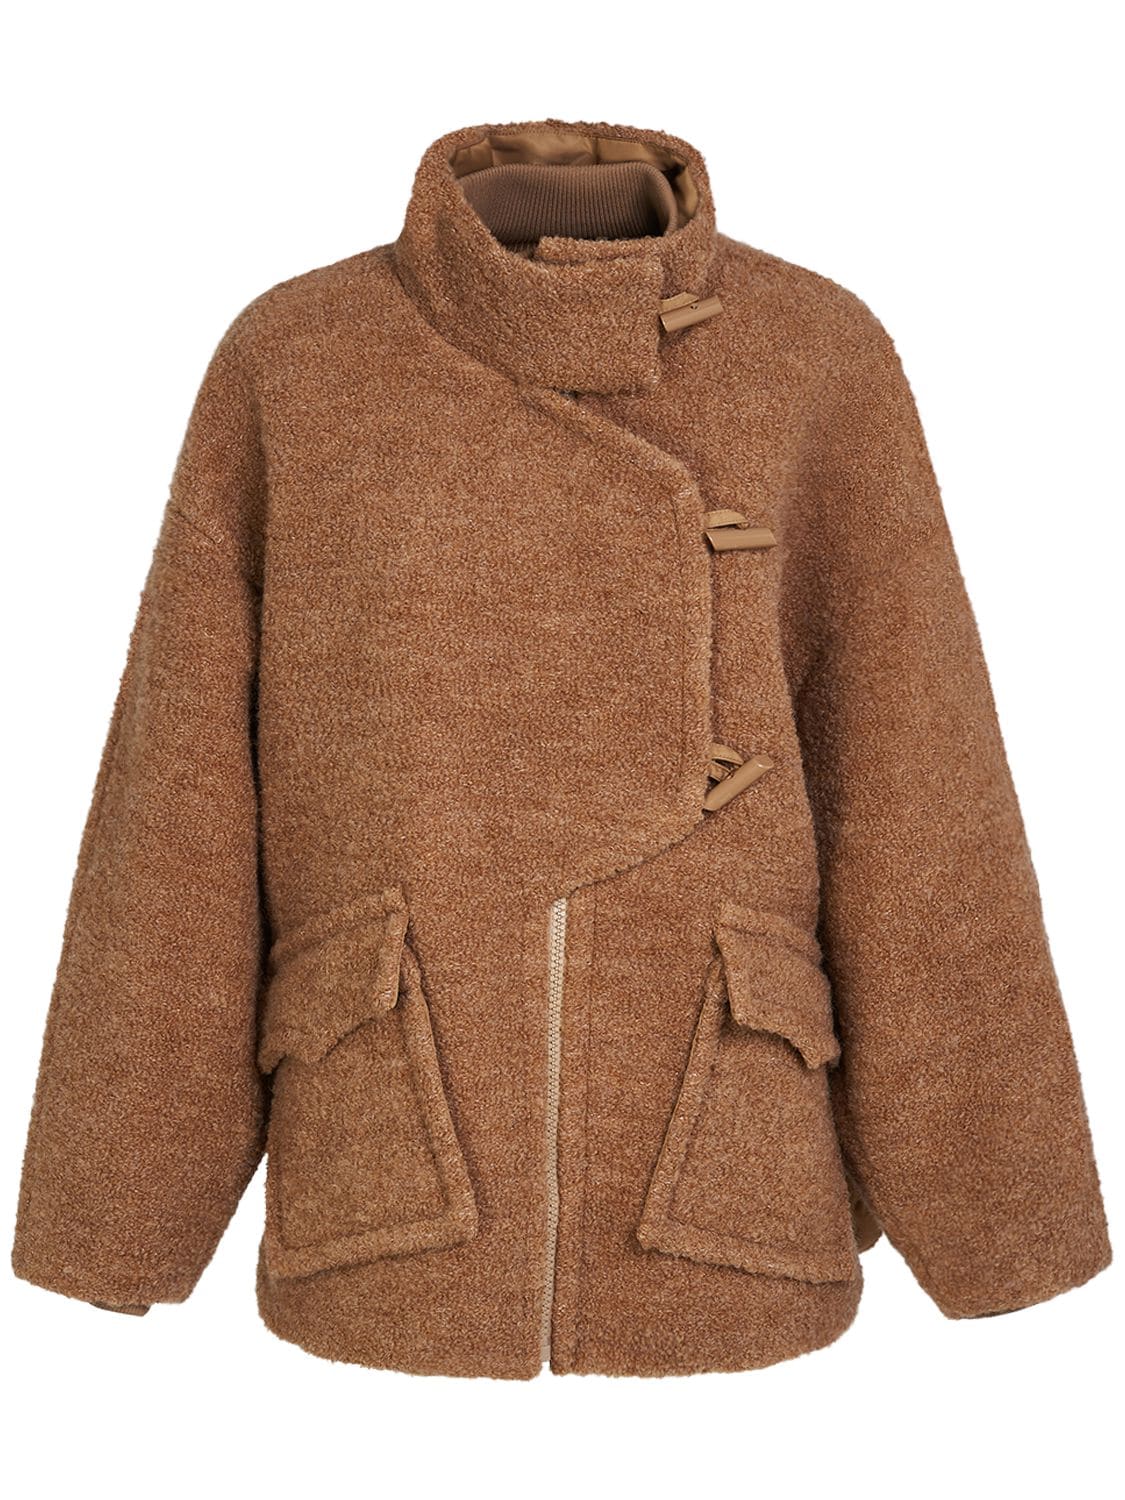 Image of Wool Blend Bouclé Jacket